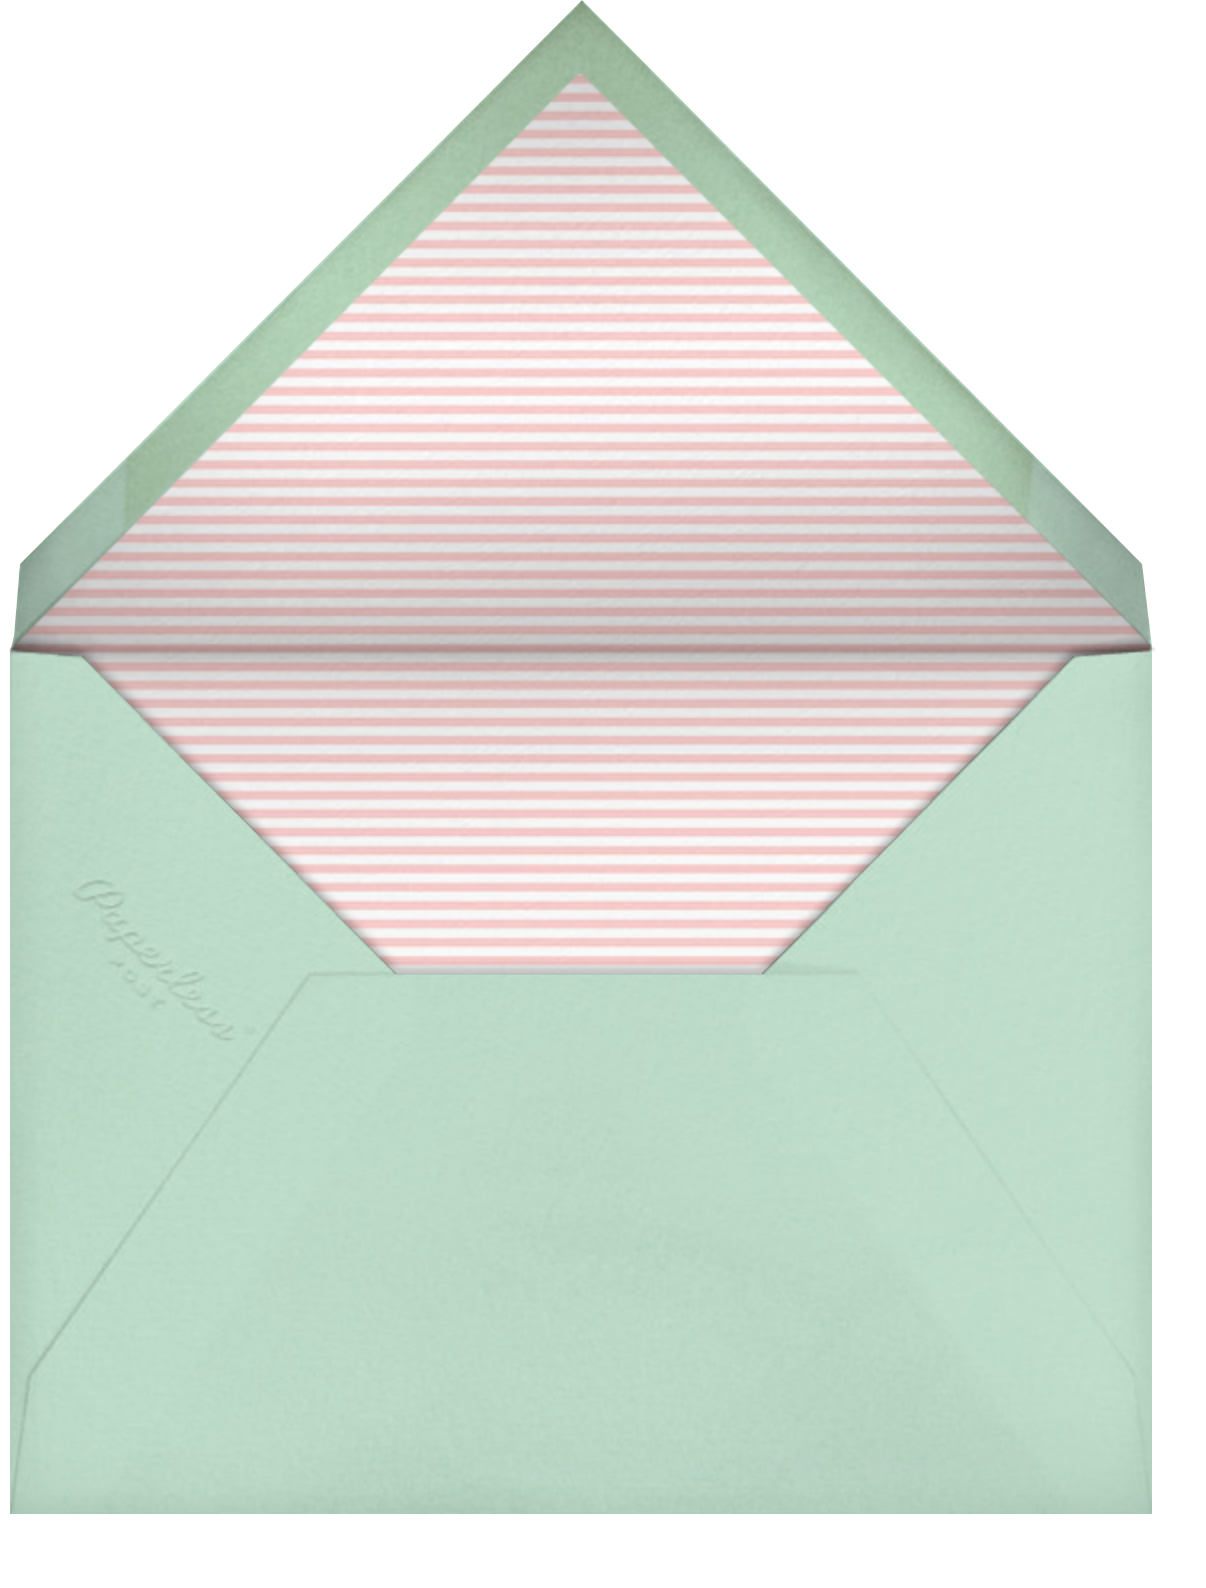 Bunny Ears - Mint - Paperless Post - Envelope